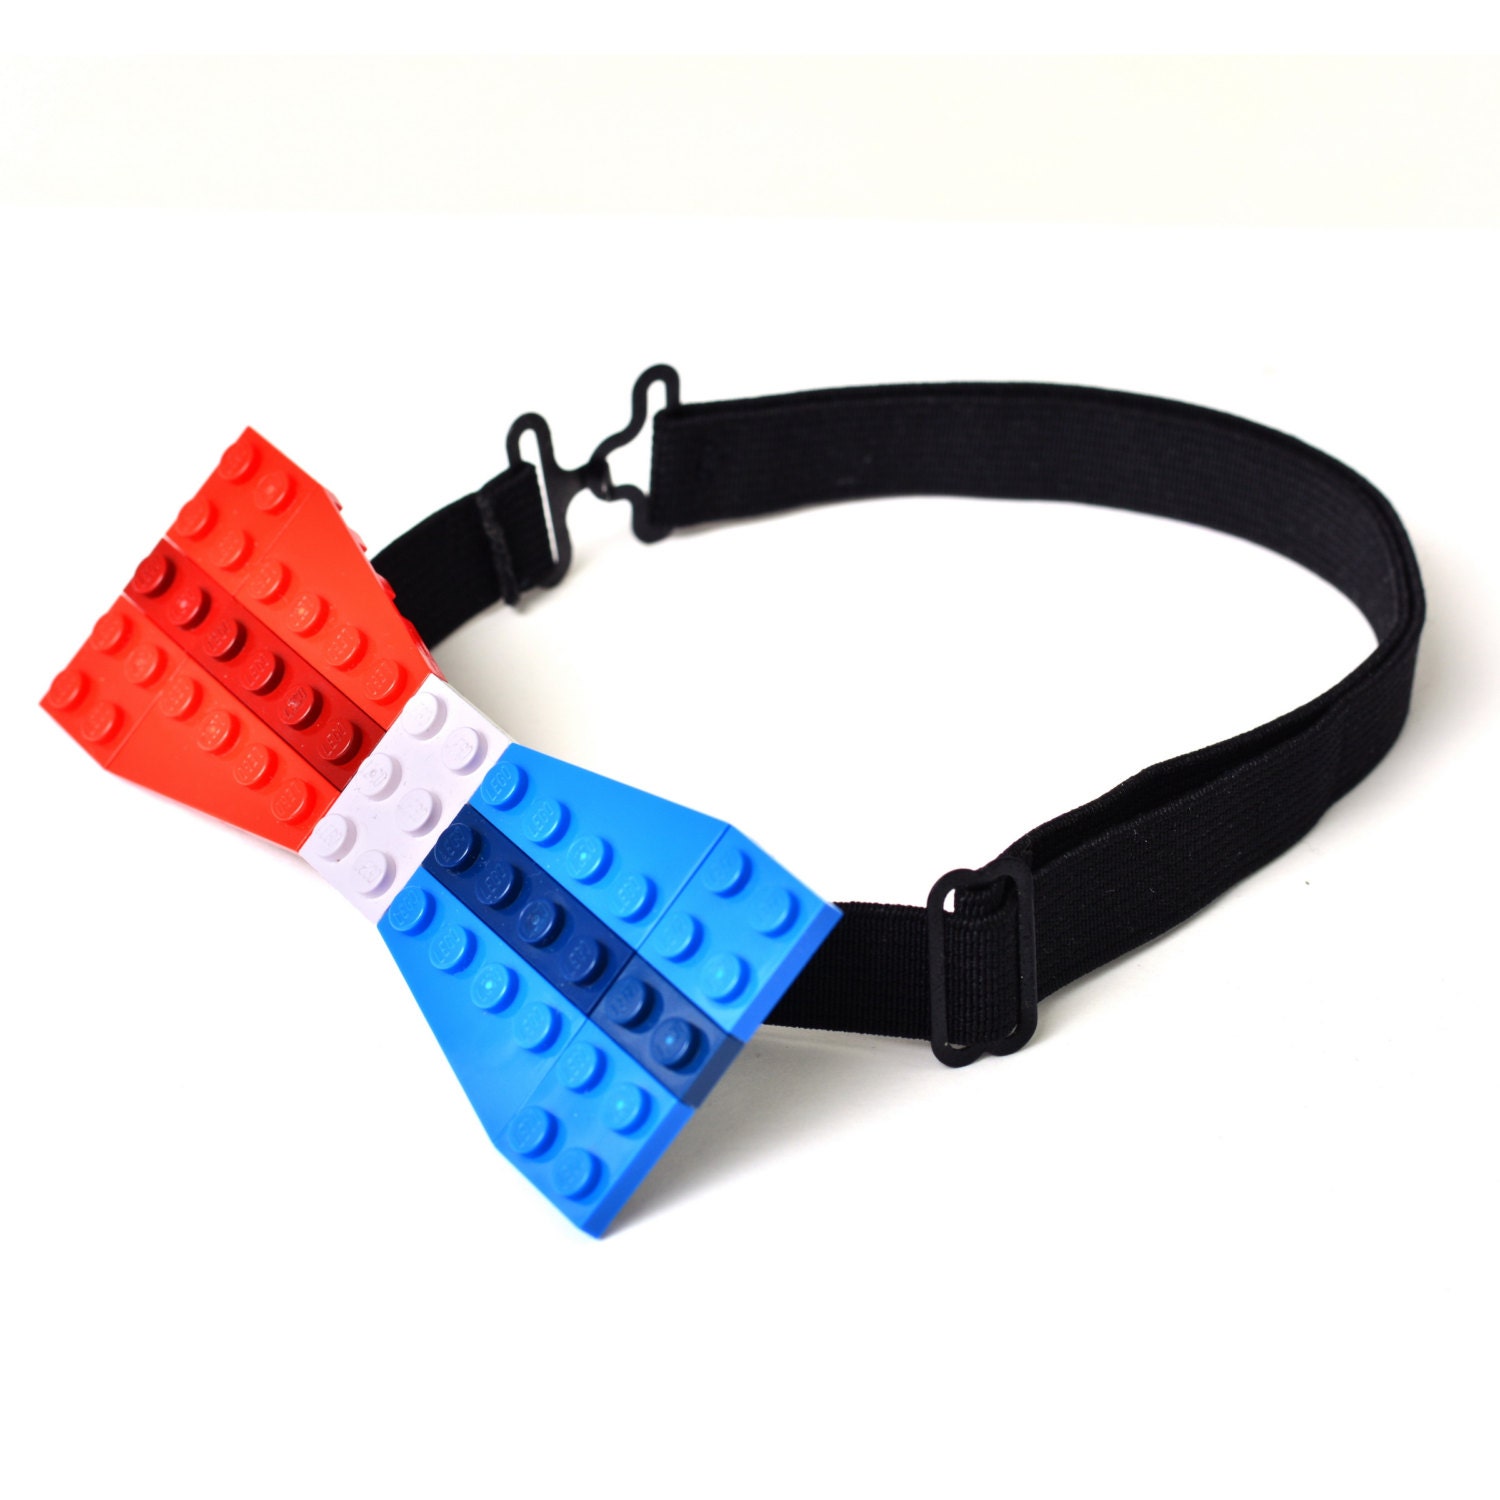 Bow tie made with LEGO\u00ae bricks FREE SHIPPING gentleman fashion birthday anniversary gift idea